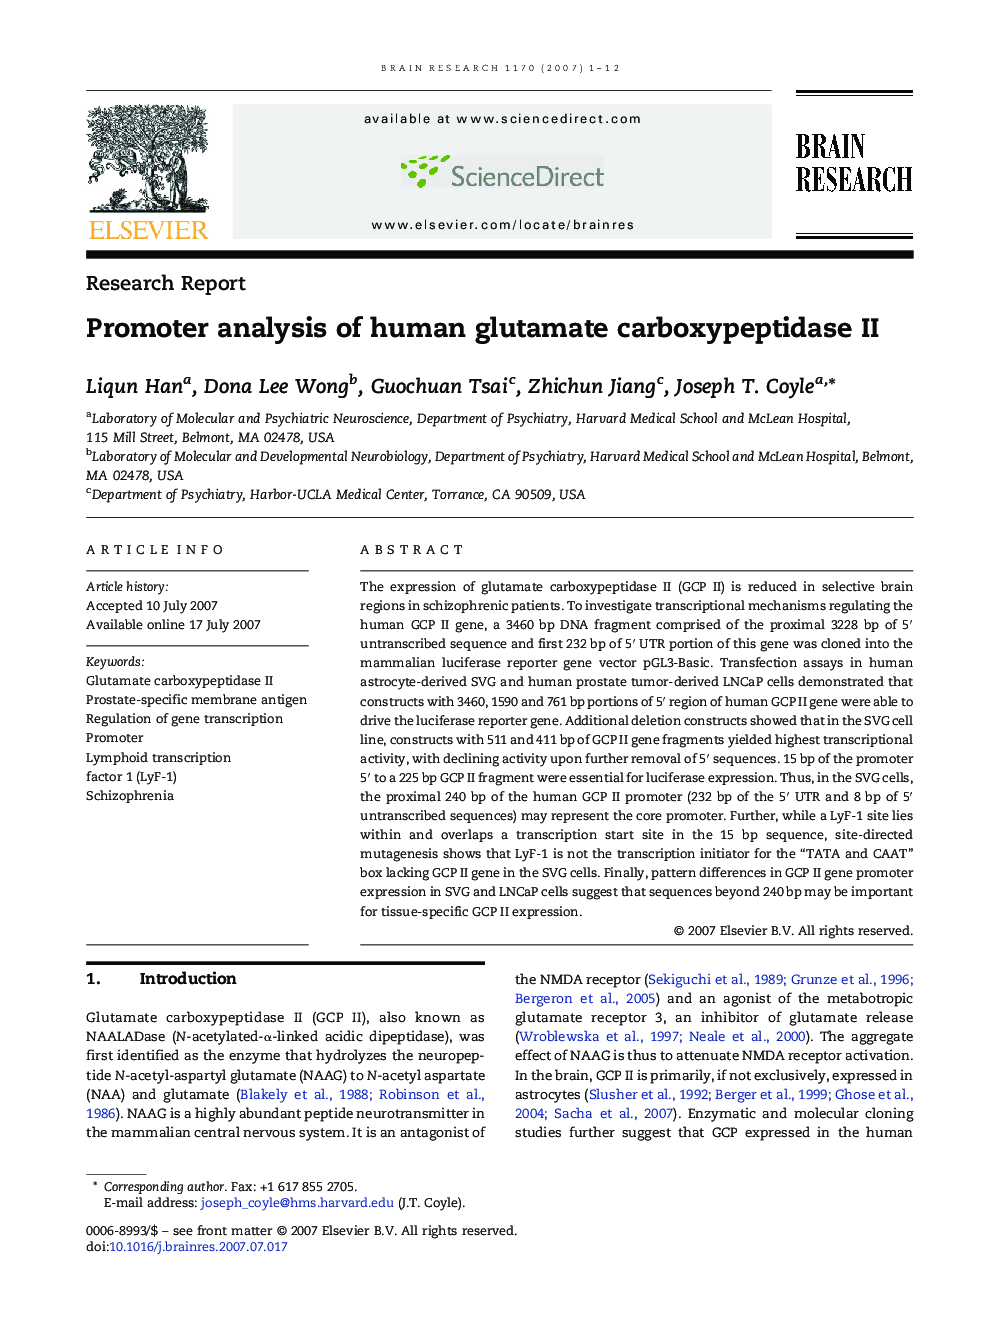 Promoter analysis of human glutamate carboxypeptidase II